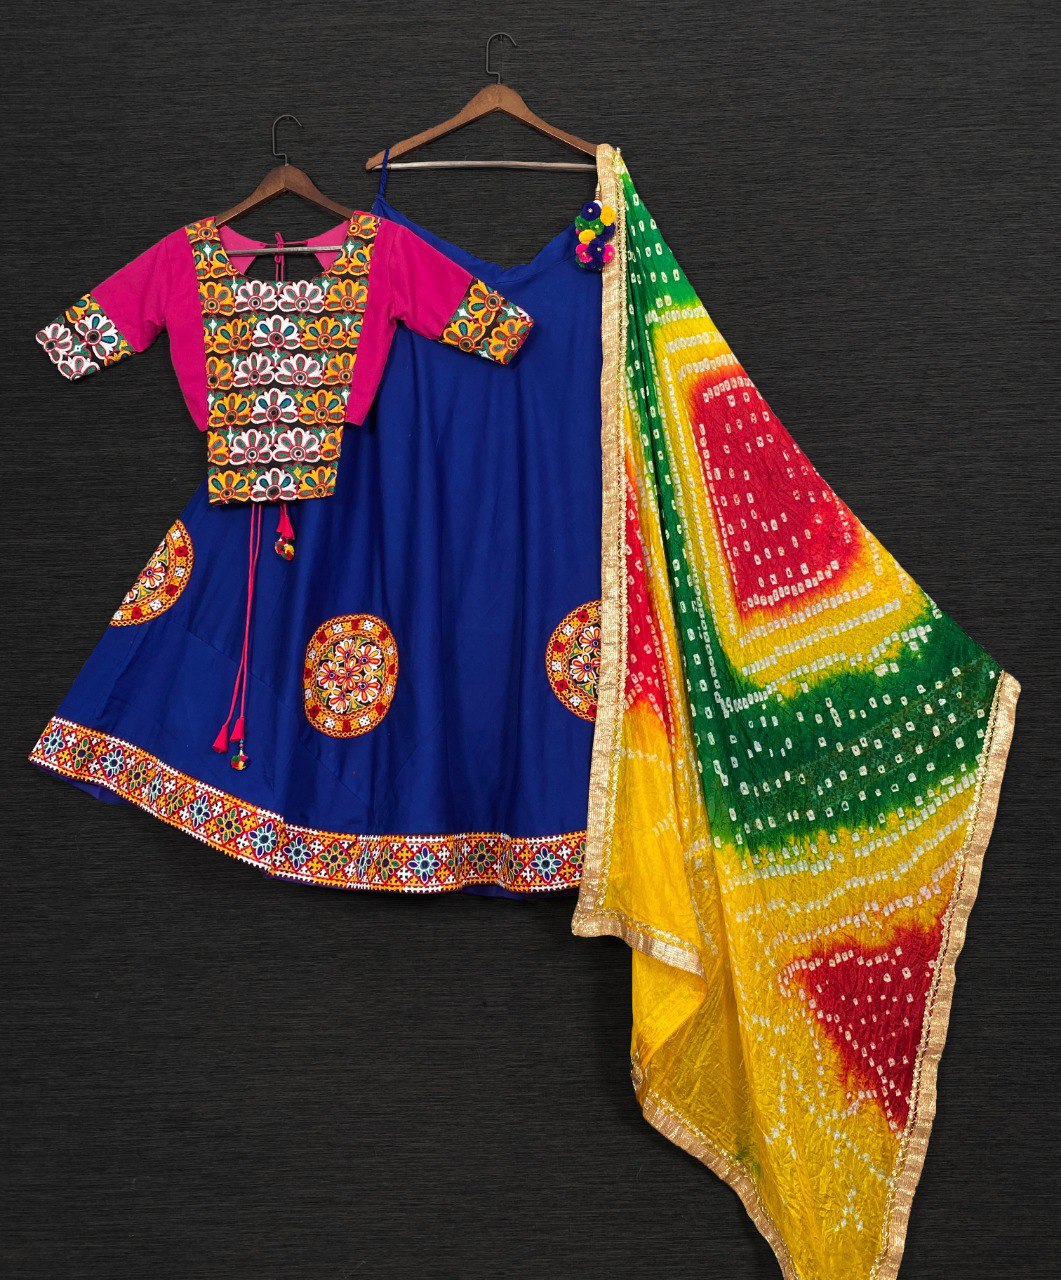 Buy Chaniya Choli - Navratri Garba Dandiya wear - Lehenga Choli Dupatta - 8  Colour Variants (Red02) at Amazon.in